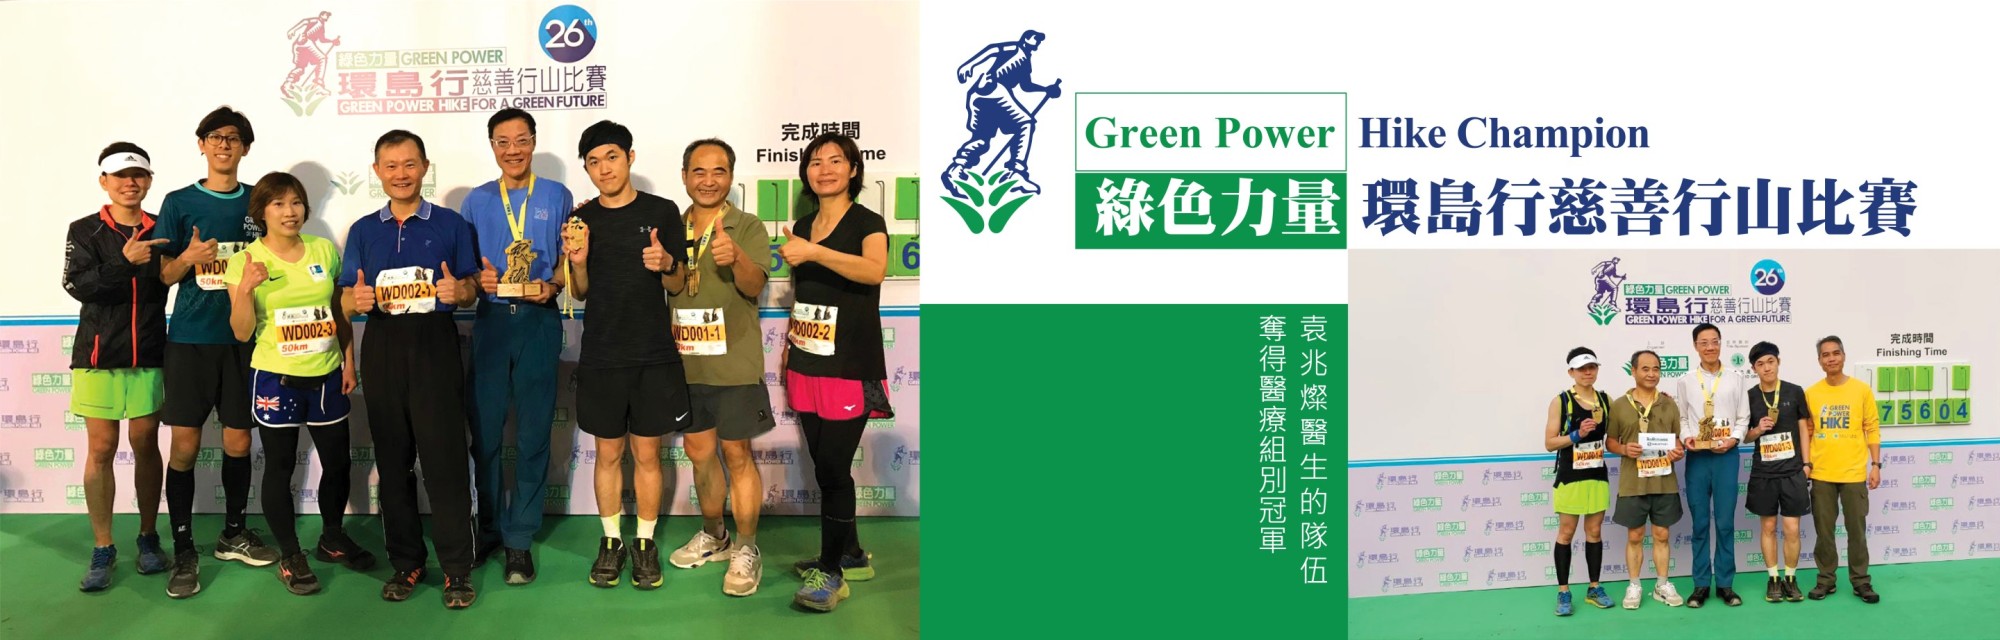 綠色力量環島慈善行山比賽 Green Power Hike Champion